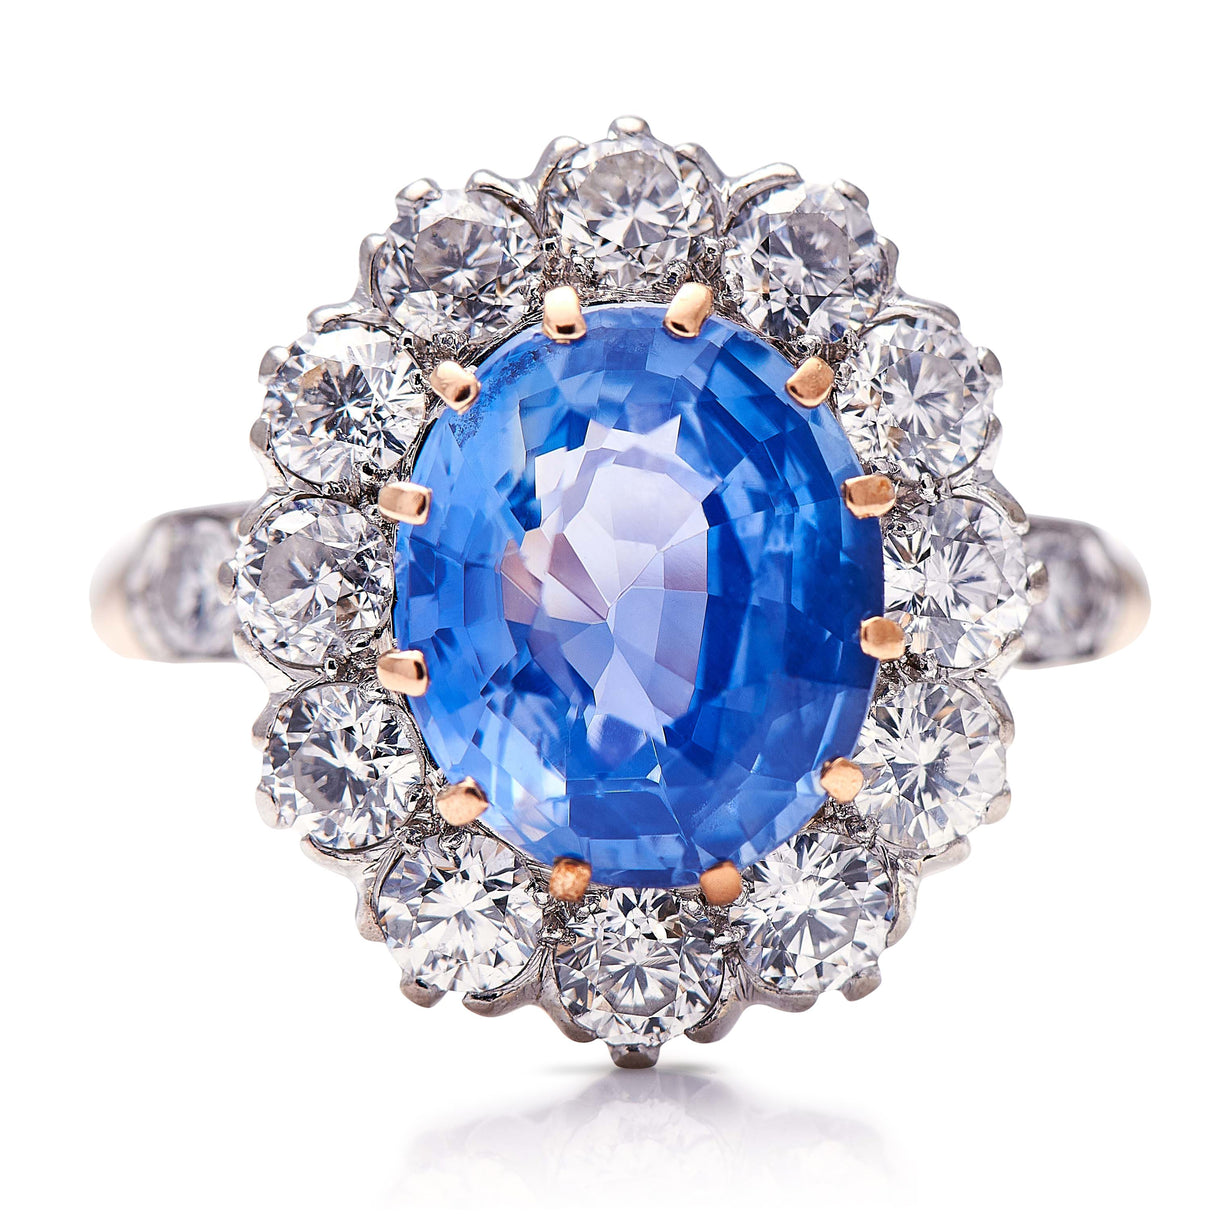 Extraordinary-French-18-Carat-Gold-Cornflower-Blue-Sapphire-Diamond-Ring-Antique